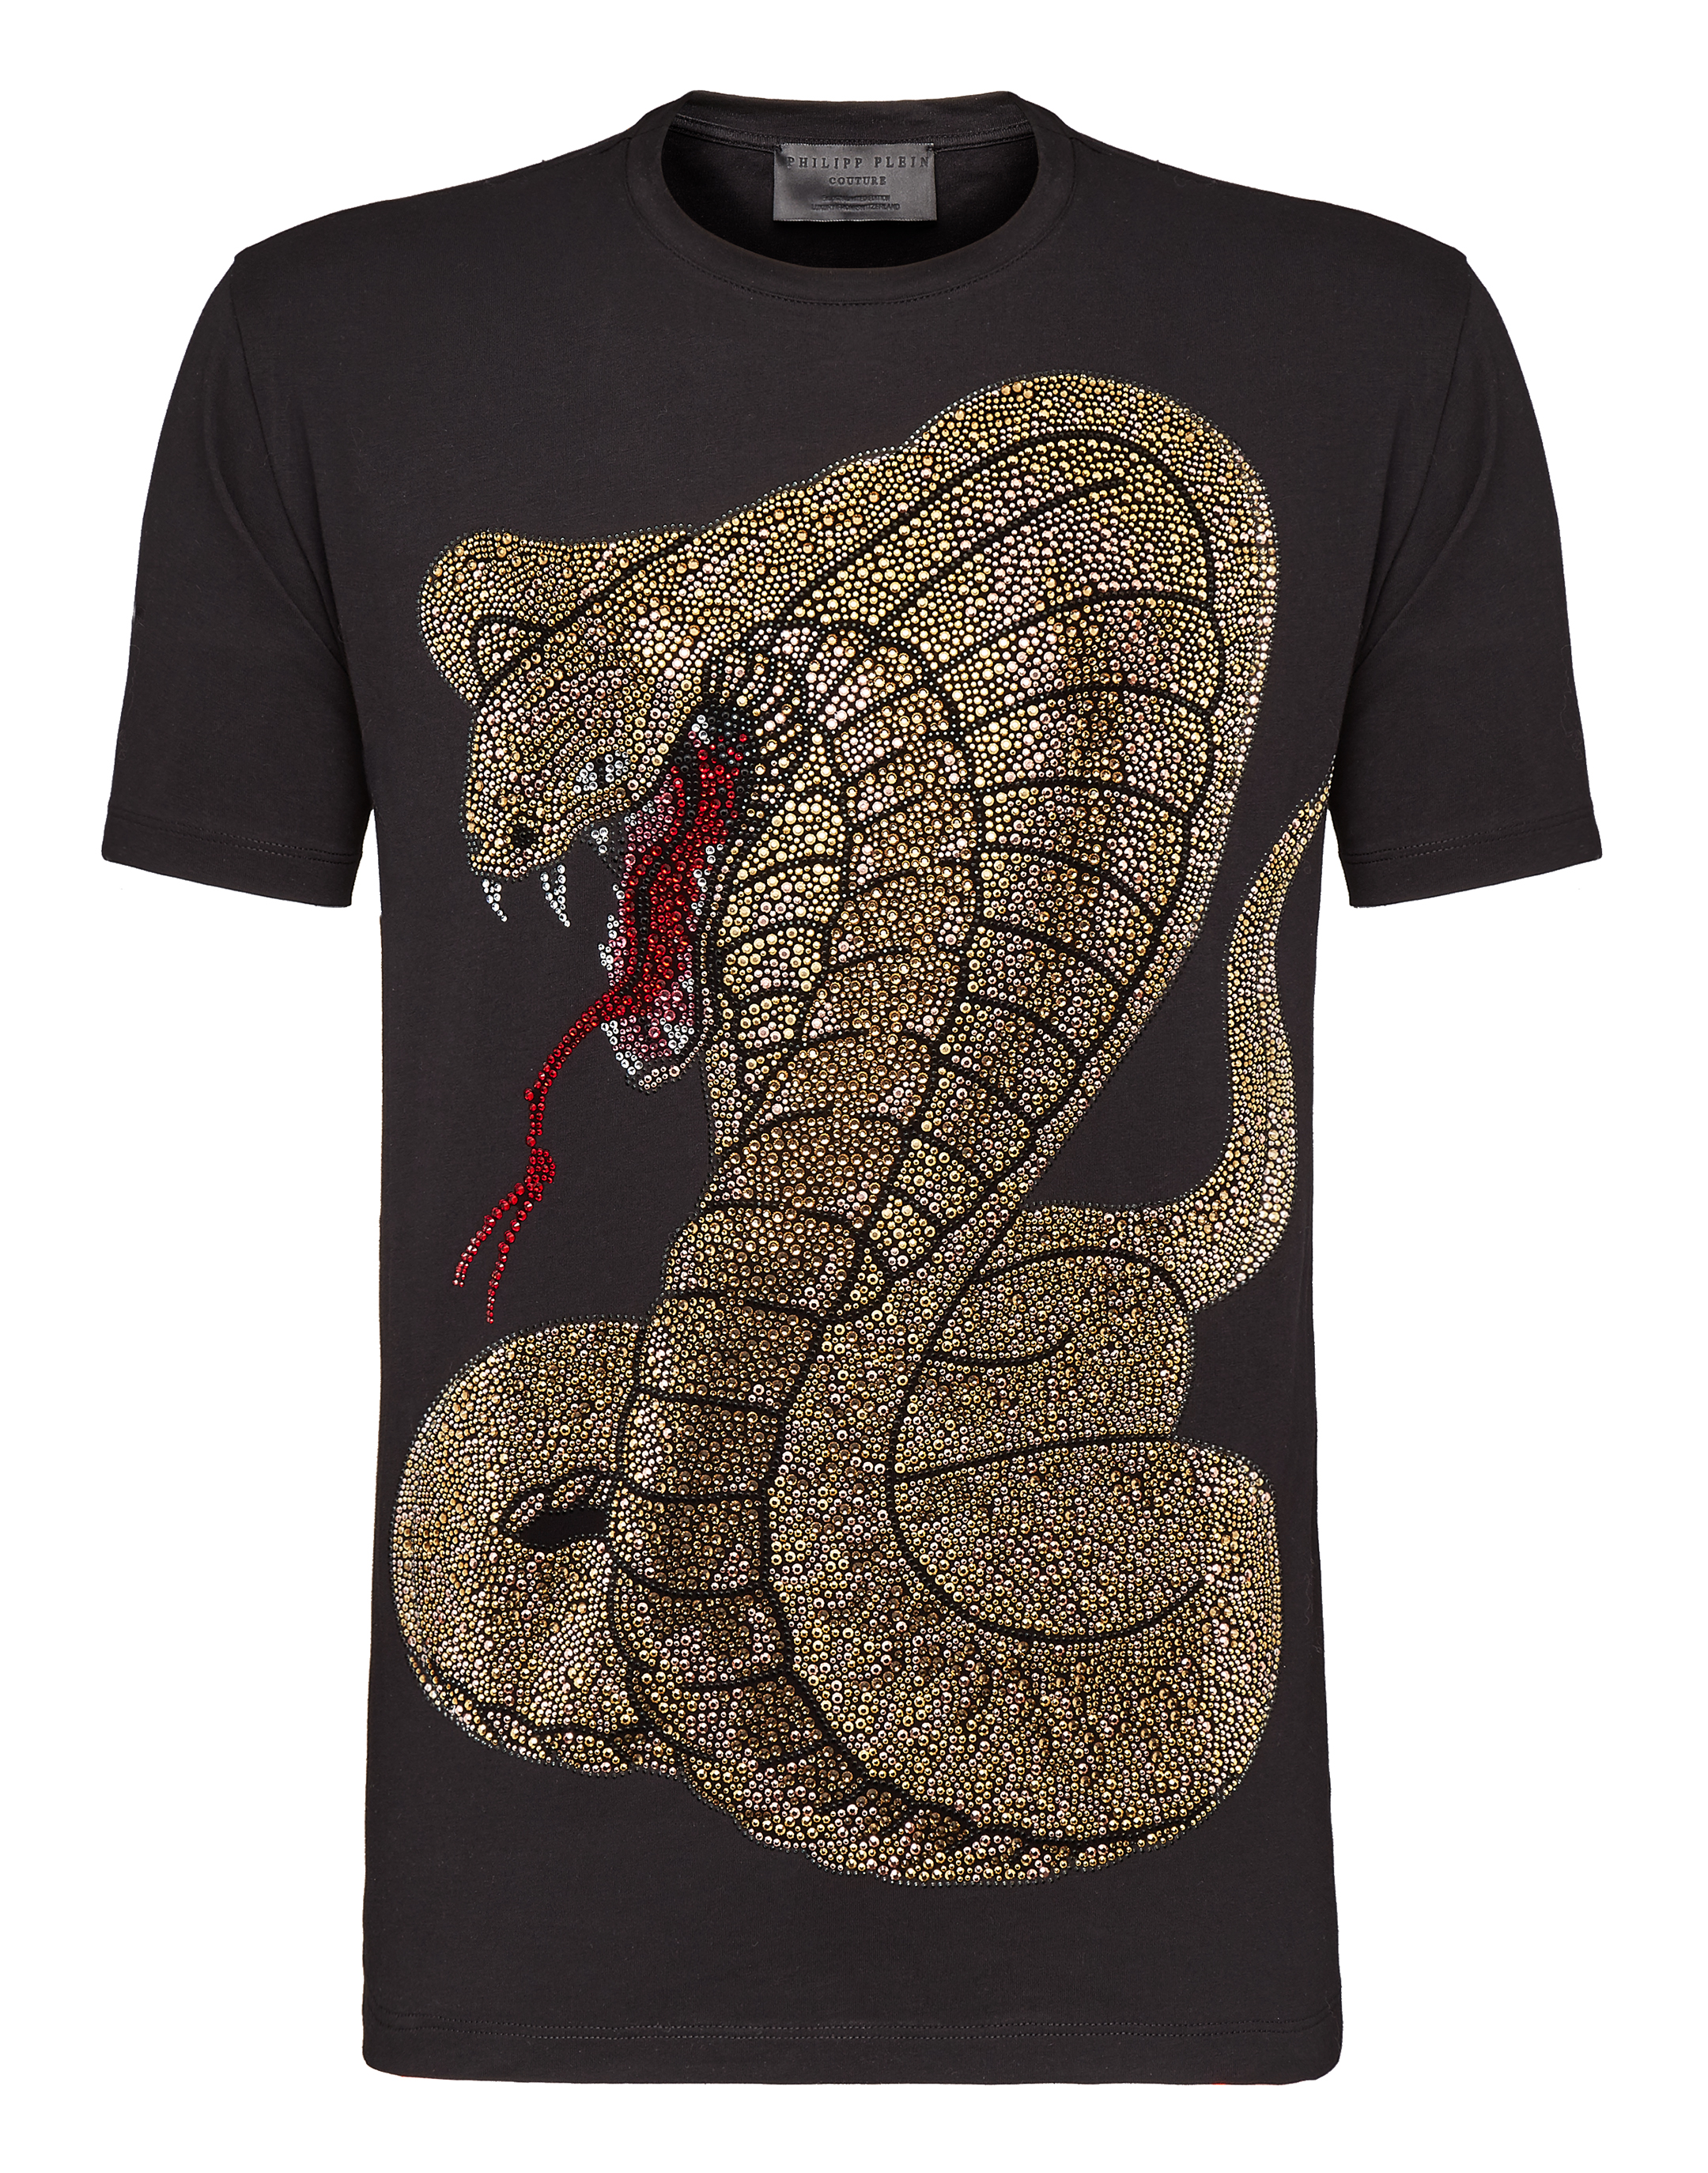 philipp plein snake shirt